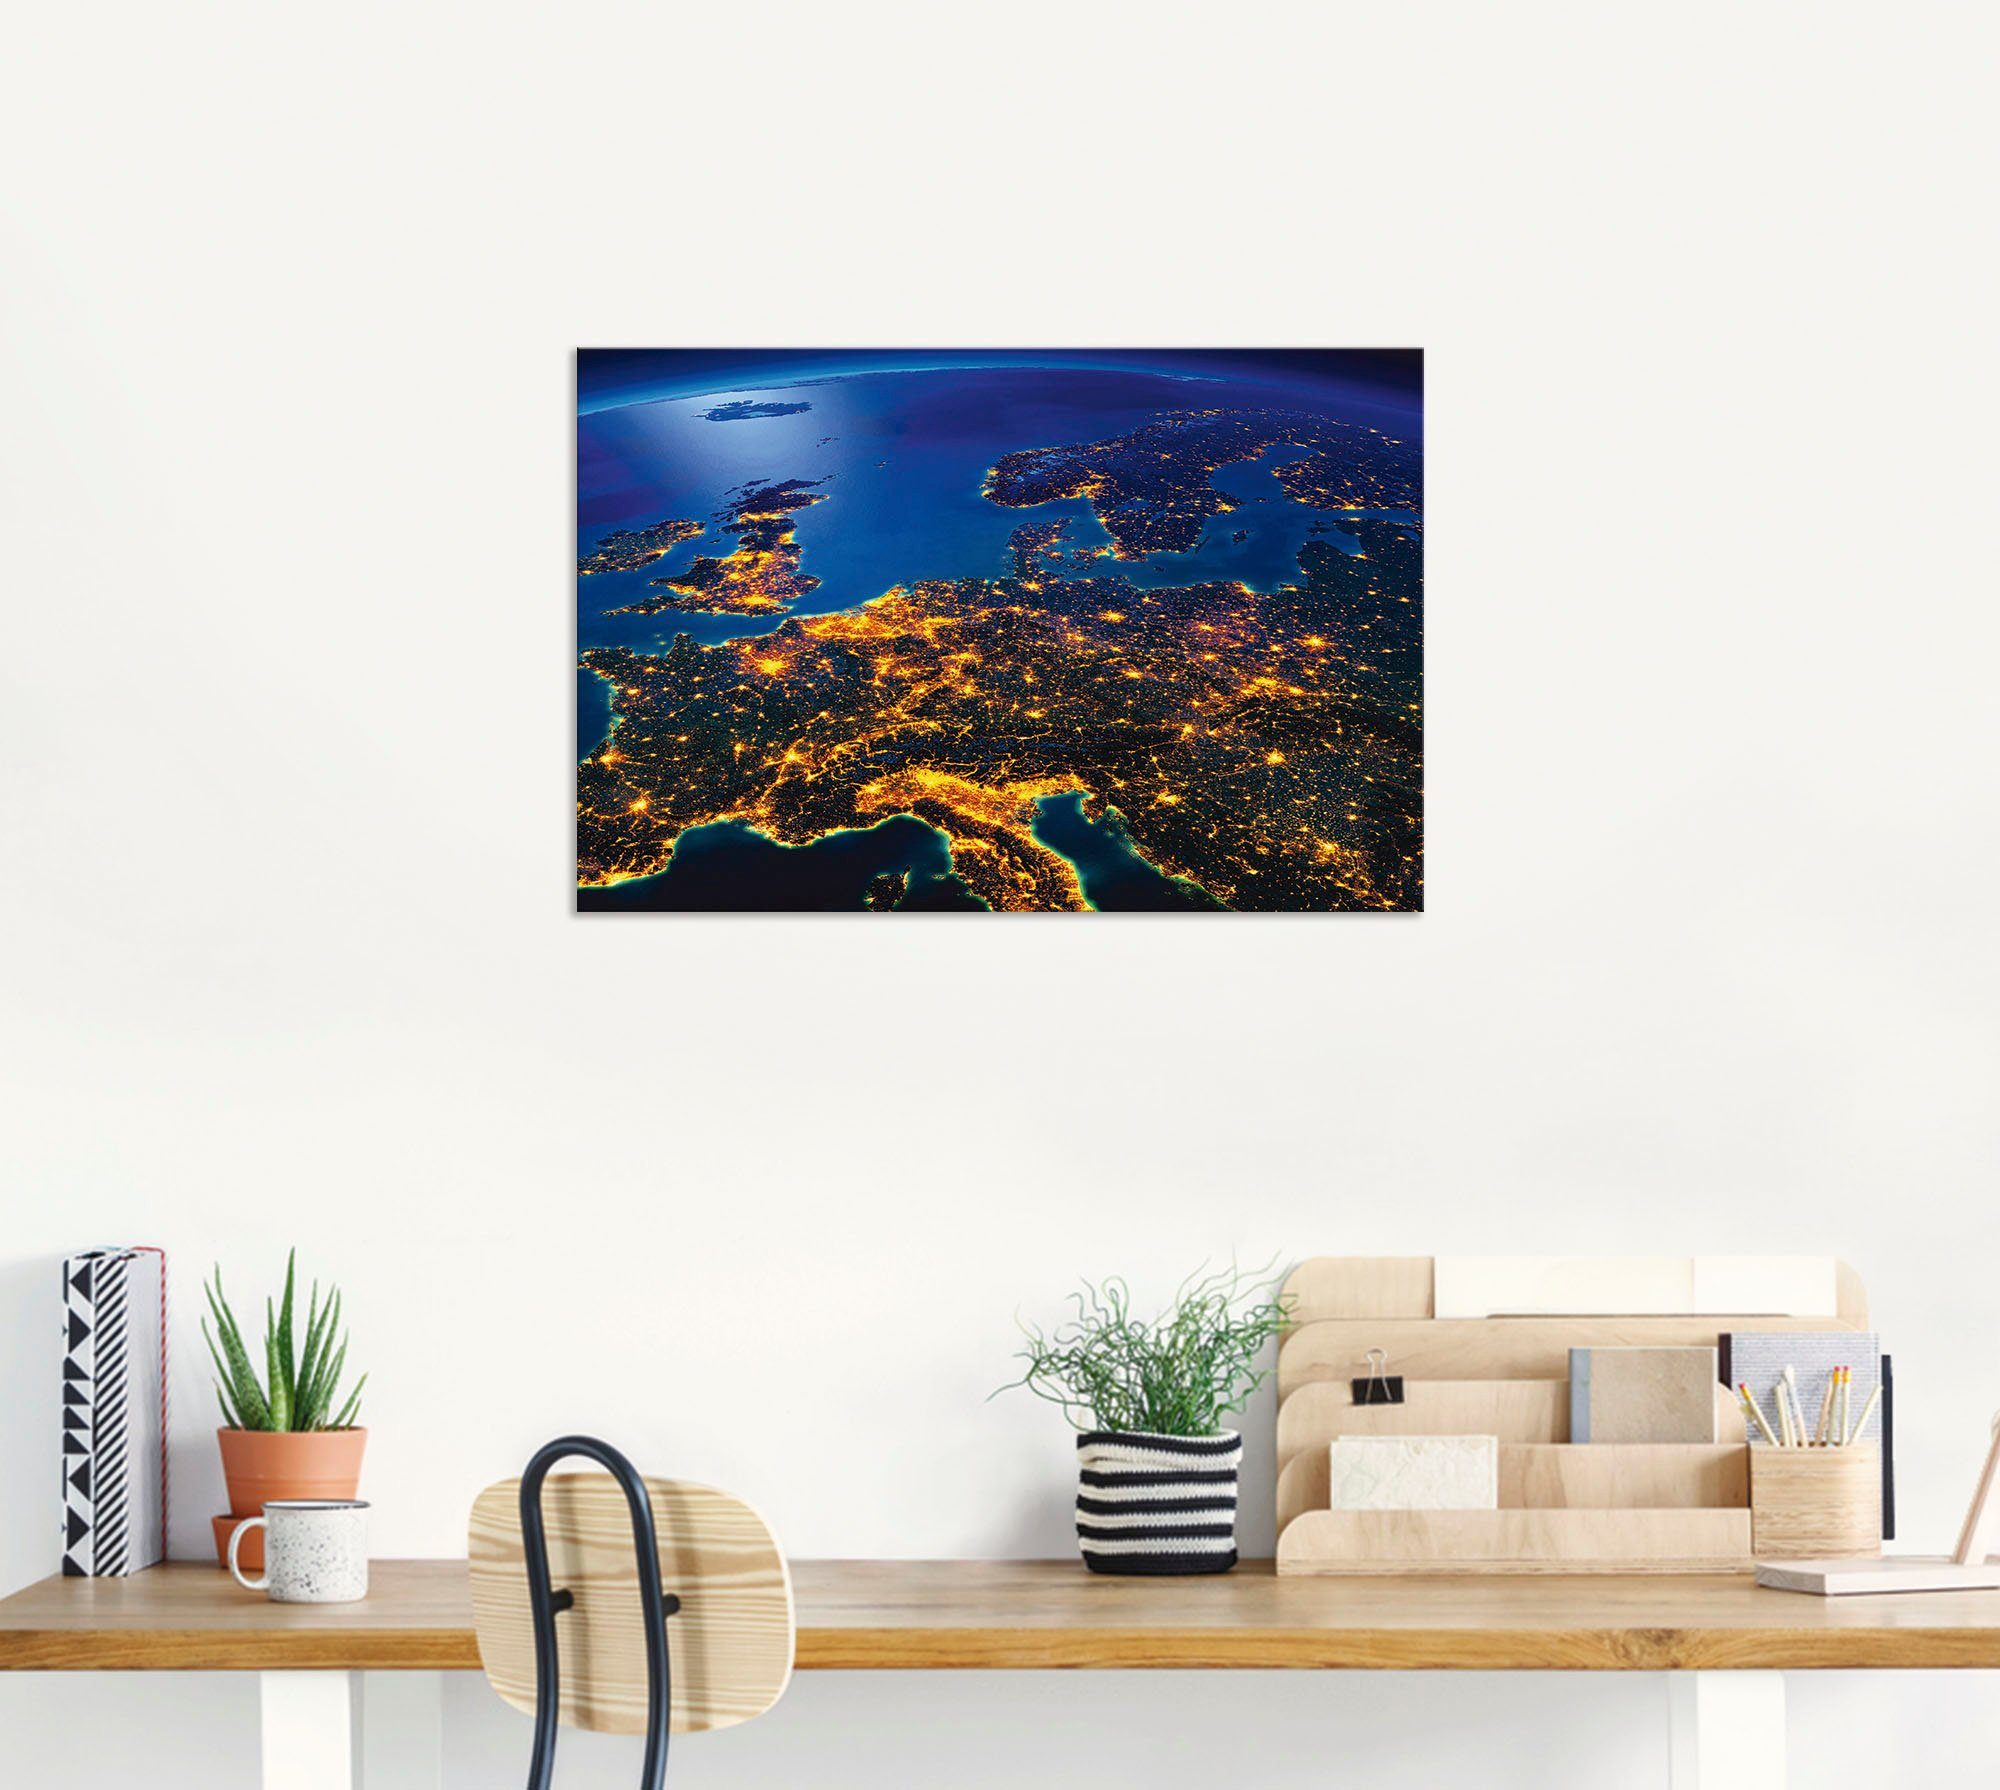 Artland Wandbild Zentral Europa vom Leinwandbild, & Weltall (1 Wandaufkleber Weltraum, versch. in oder Alubild, als Kosmos Poster Größen St)